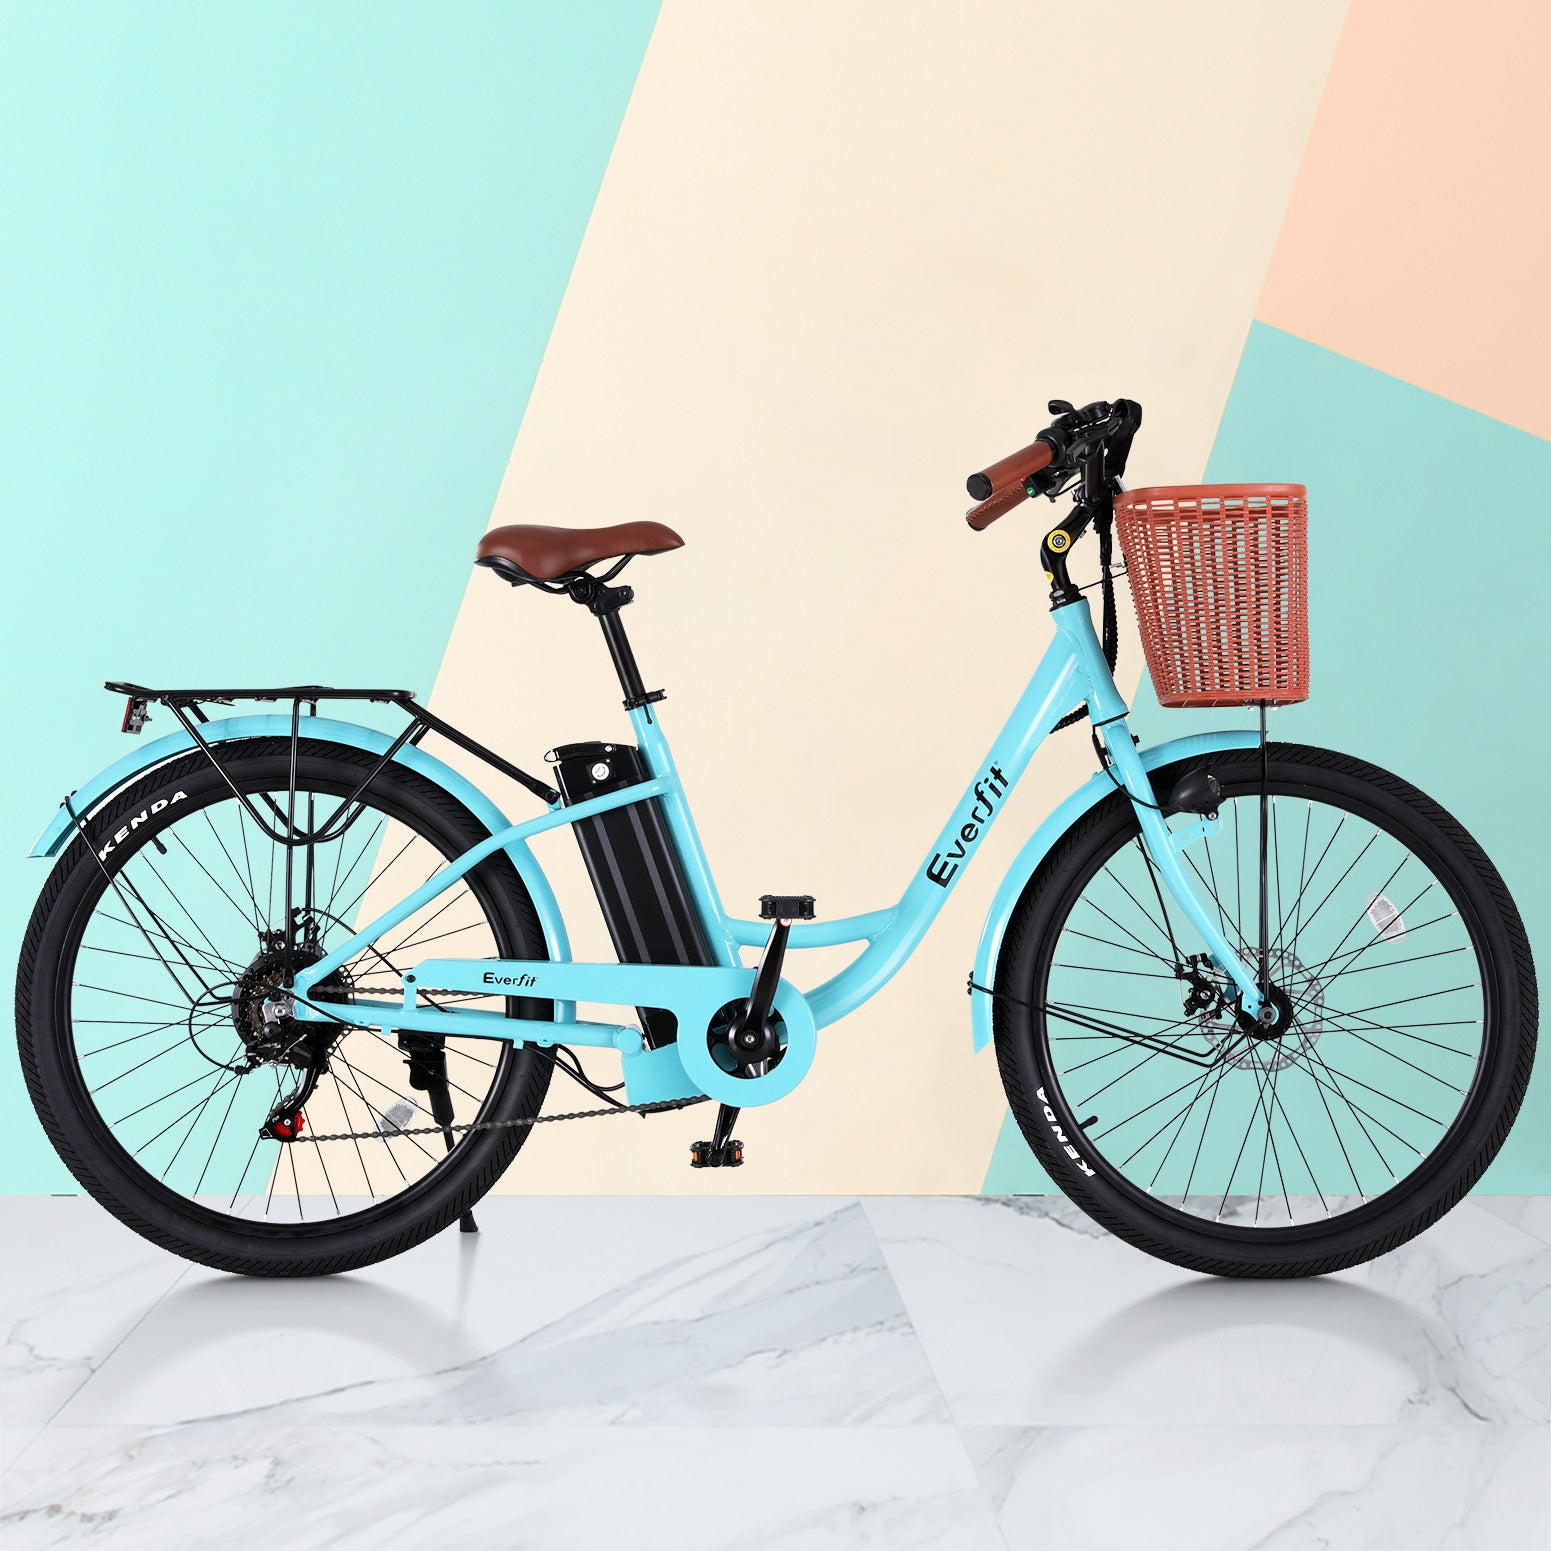 Everfit 26" Electric Bike City Bicycle eBike e-Bike Commuter w/ Battery BL